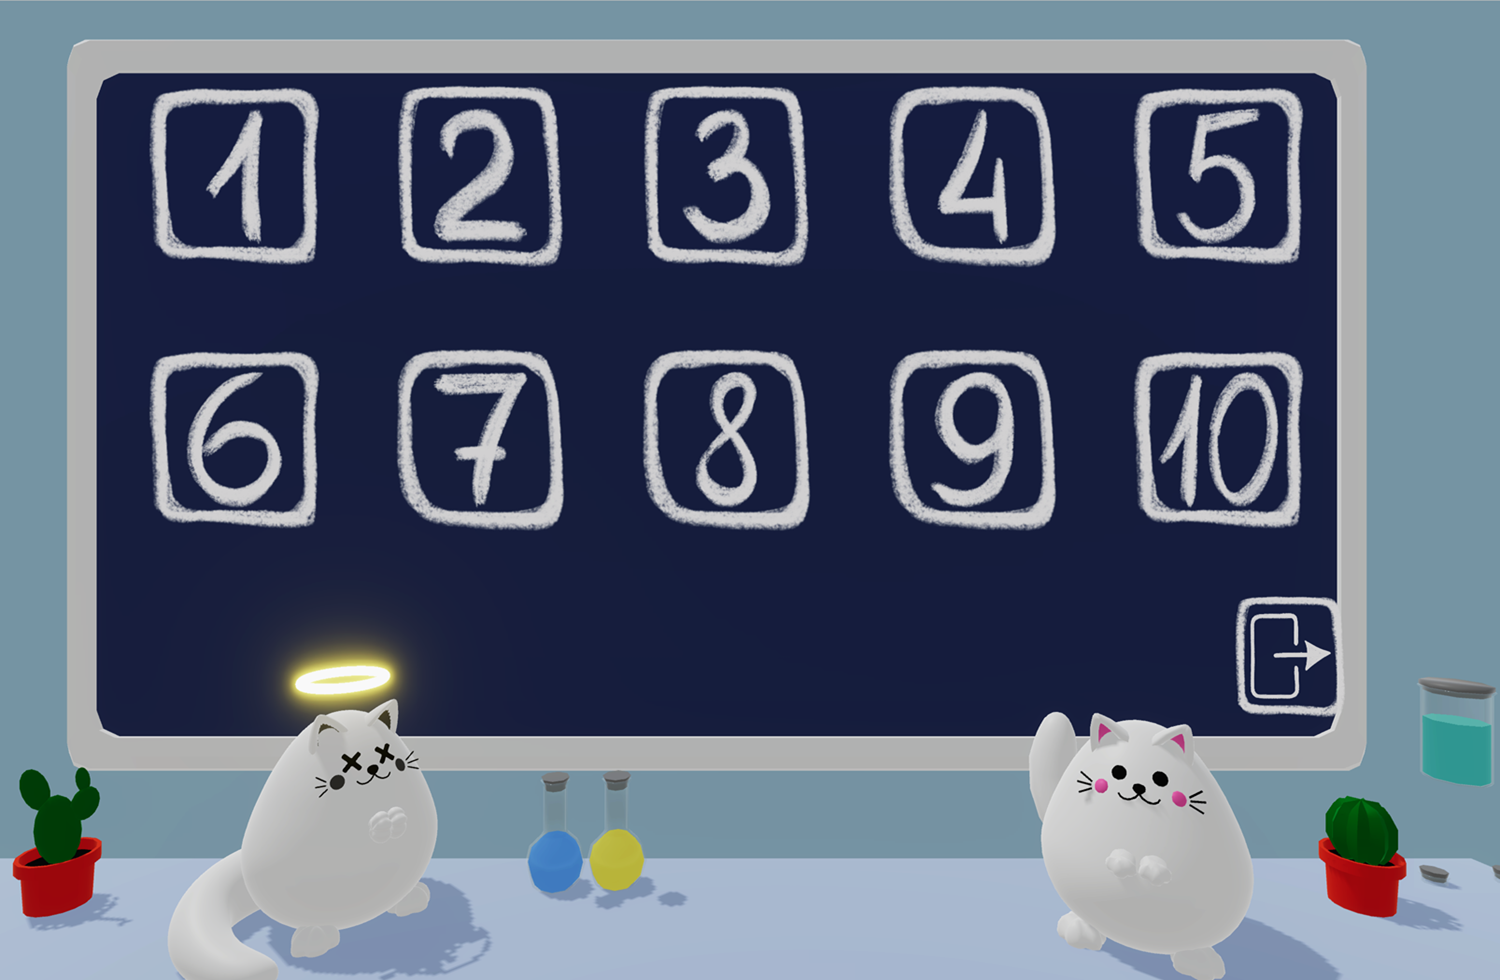 Schrodinger's Dual Cat Game Level Select Screen Screenshot.